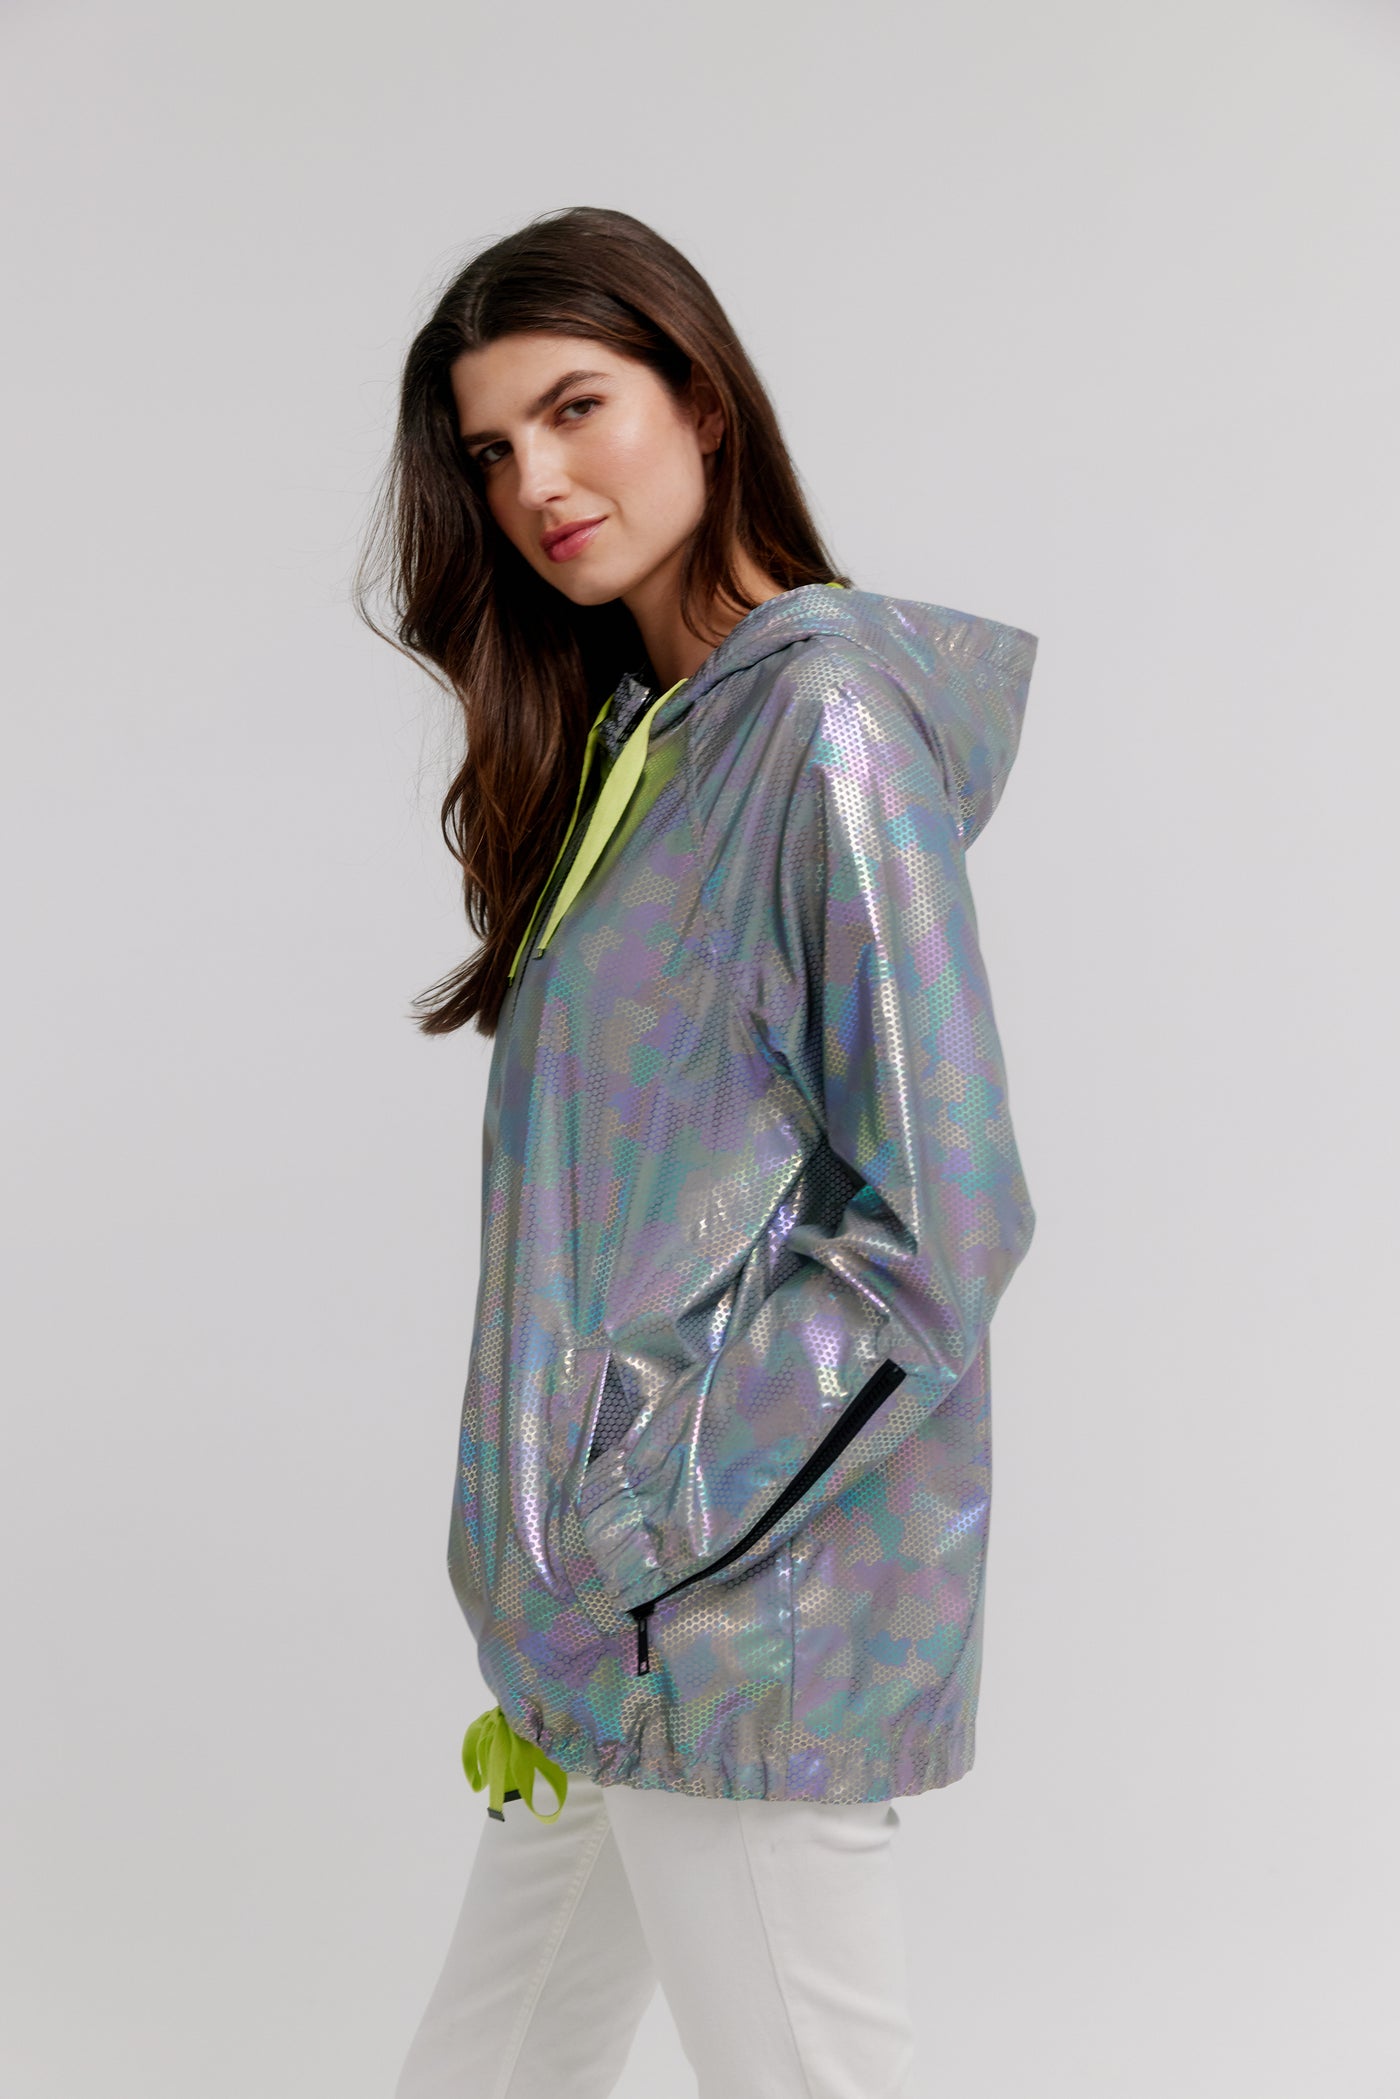 Nikki Jones Adjustable Hooded Blouson In Printed Reflective Fabric 